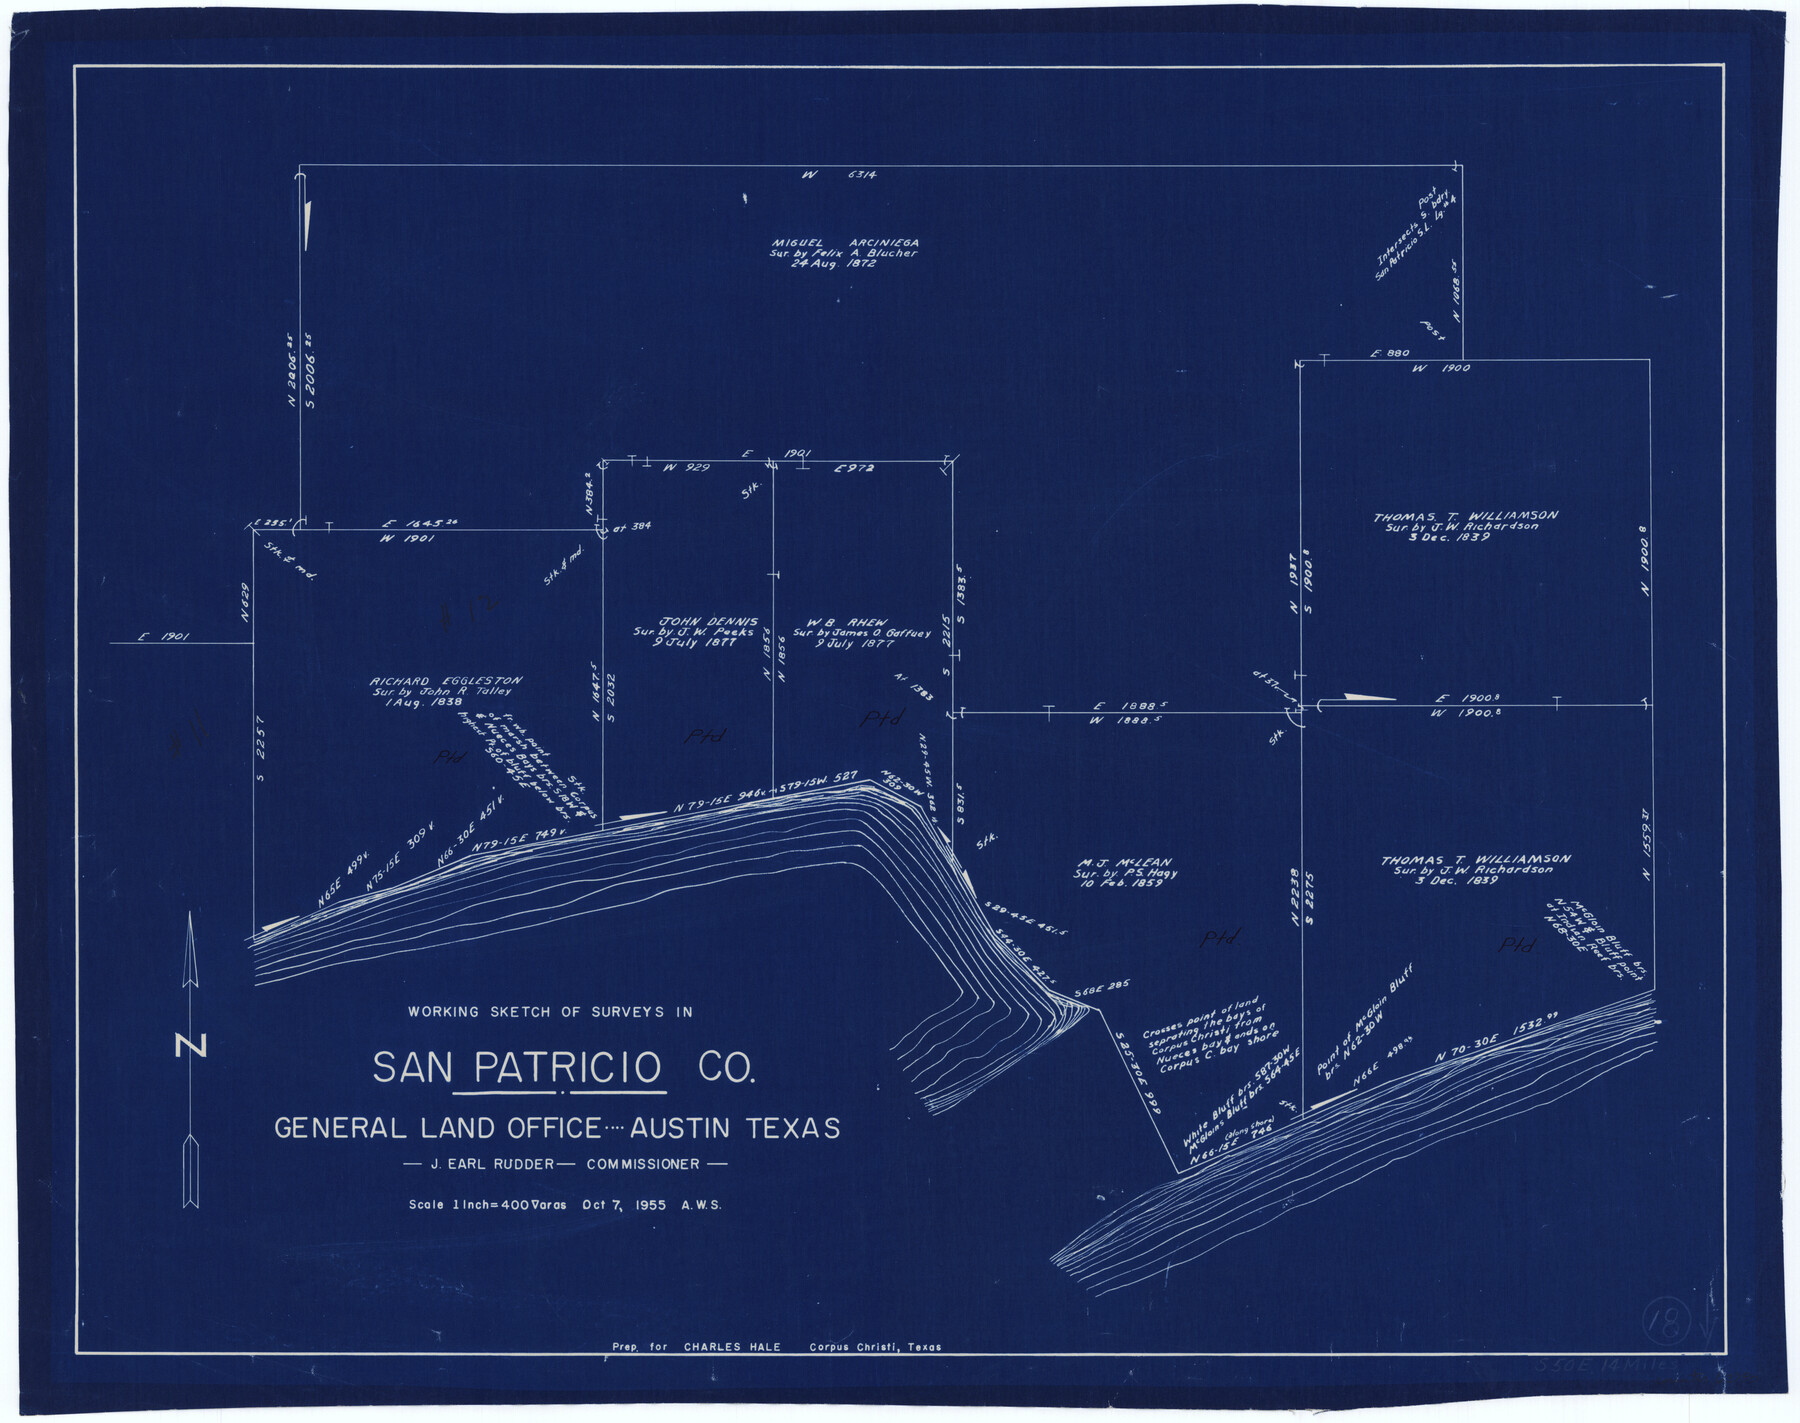 63780, San Patricio County Working Sketch 18, General Map Collection